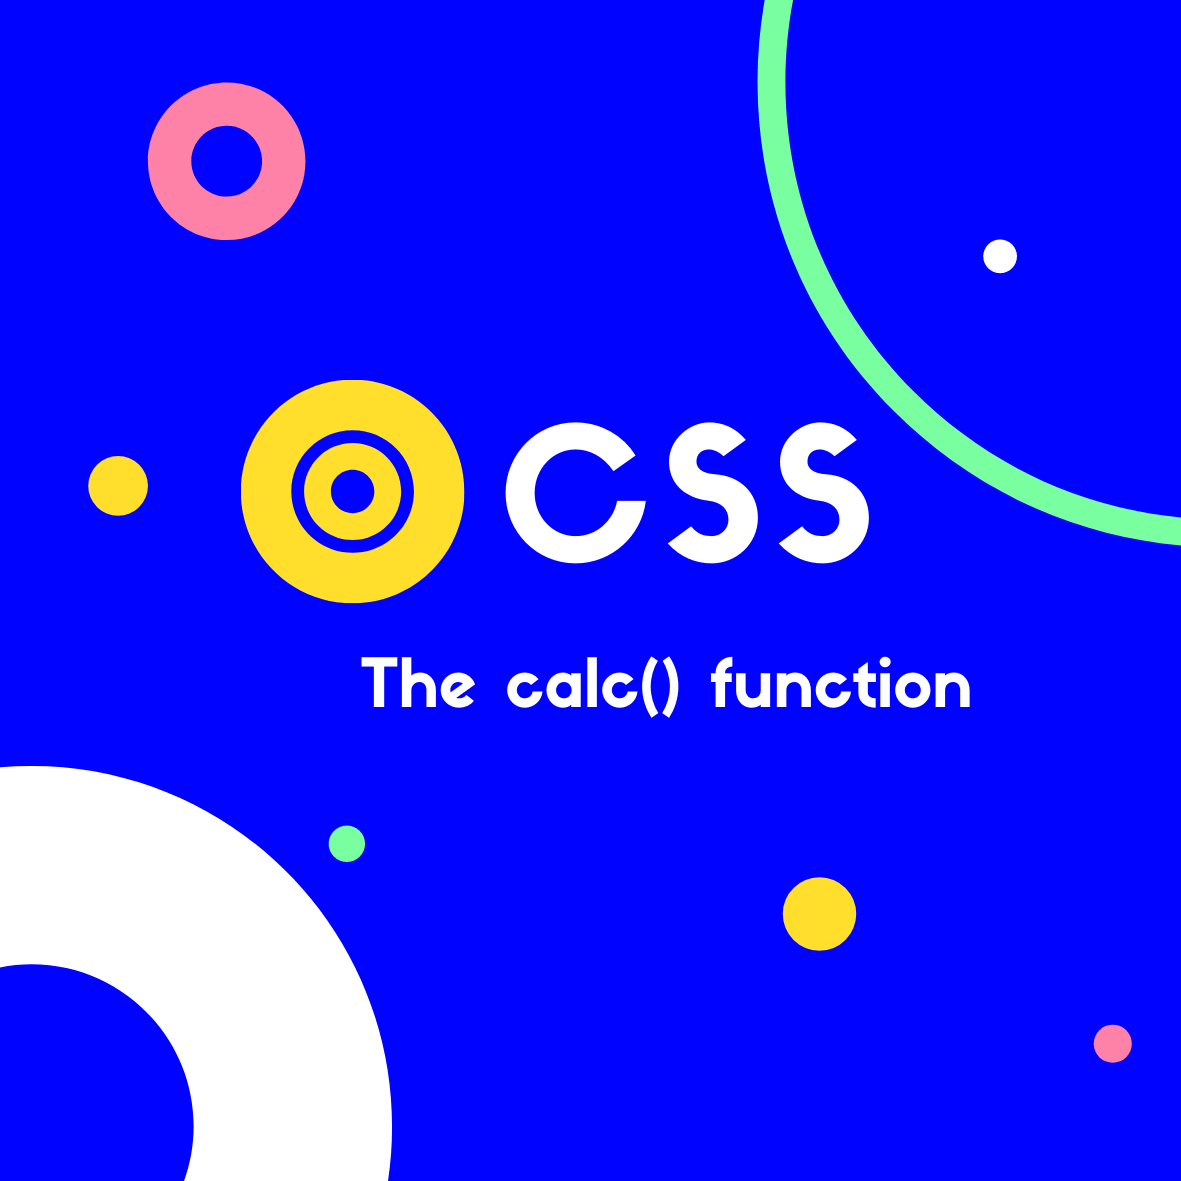 CSS calc()